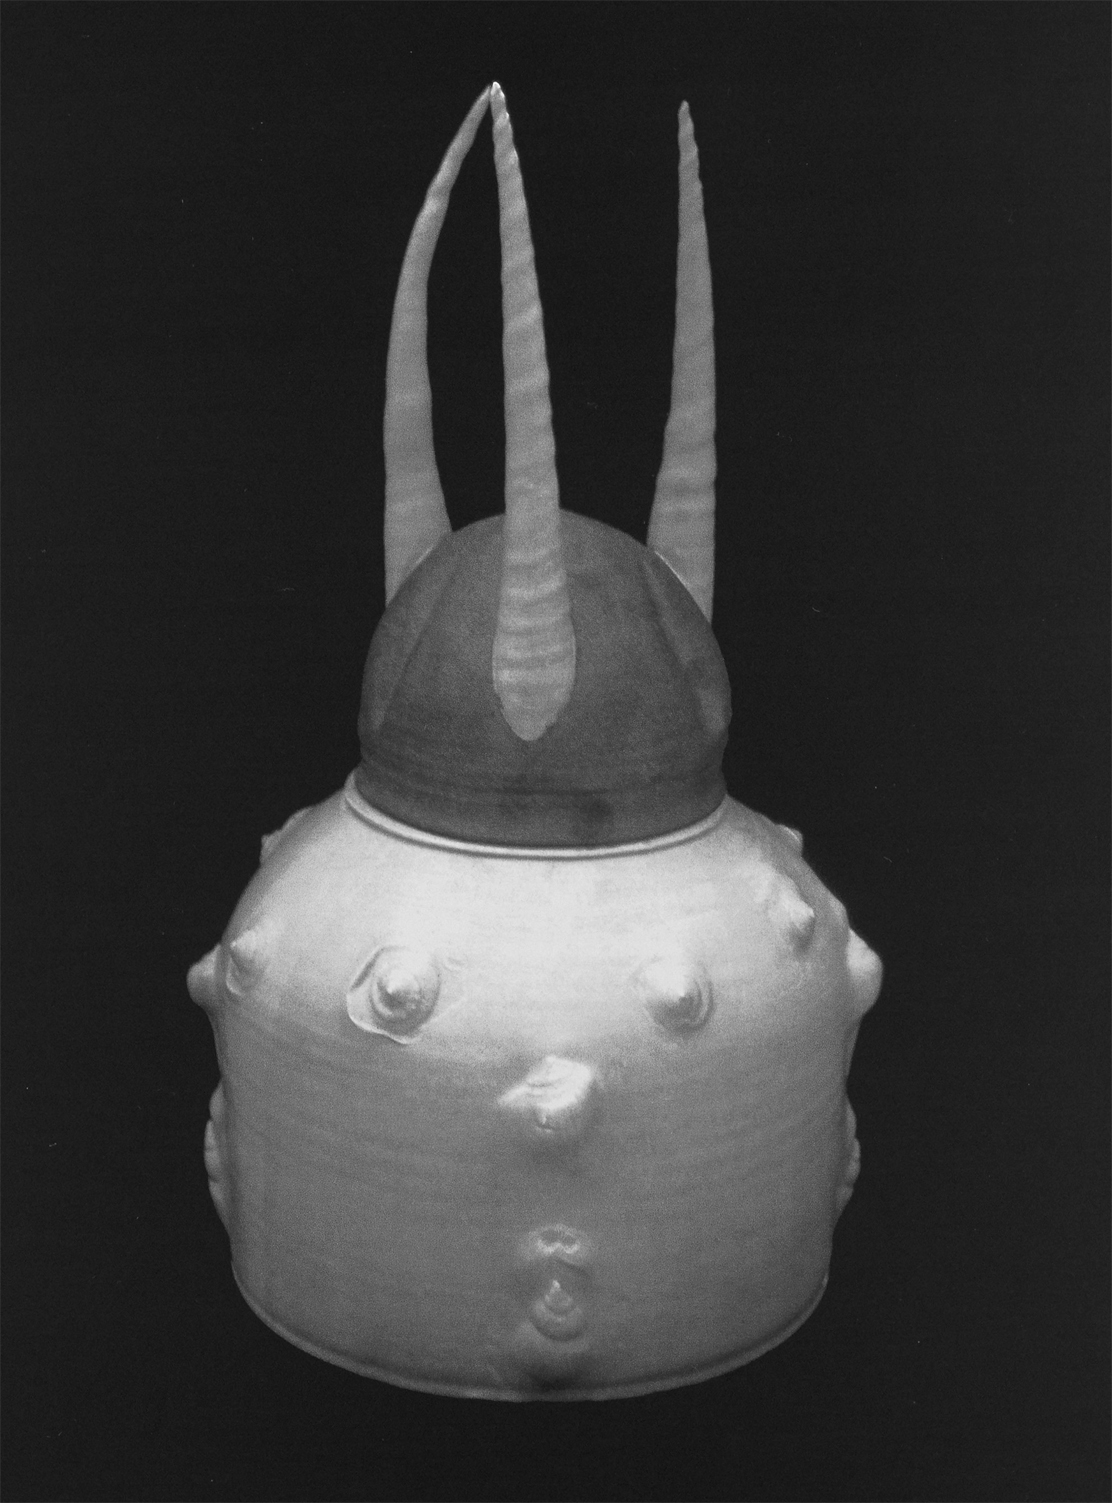 Norm Schulman. Viking, 1975. Porcelain, impressed shell molds, feldspathic glaze, copper-clad lid, 18 x 14 in.